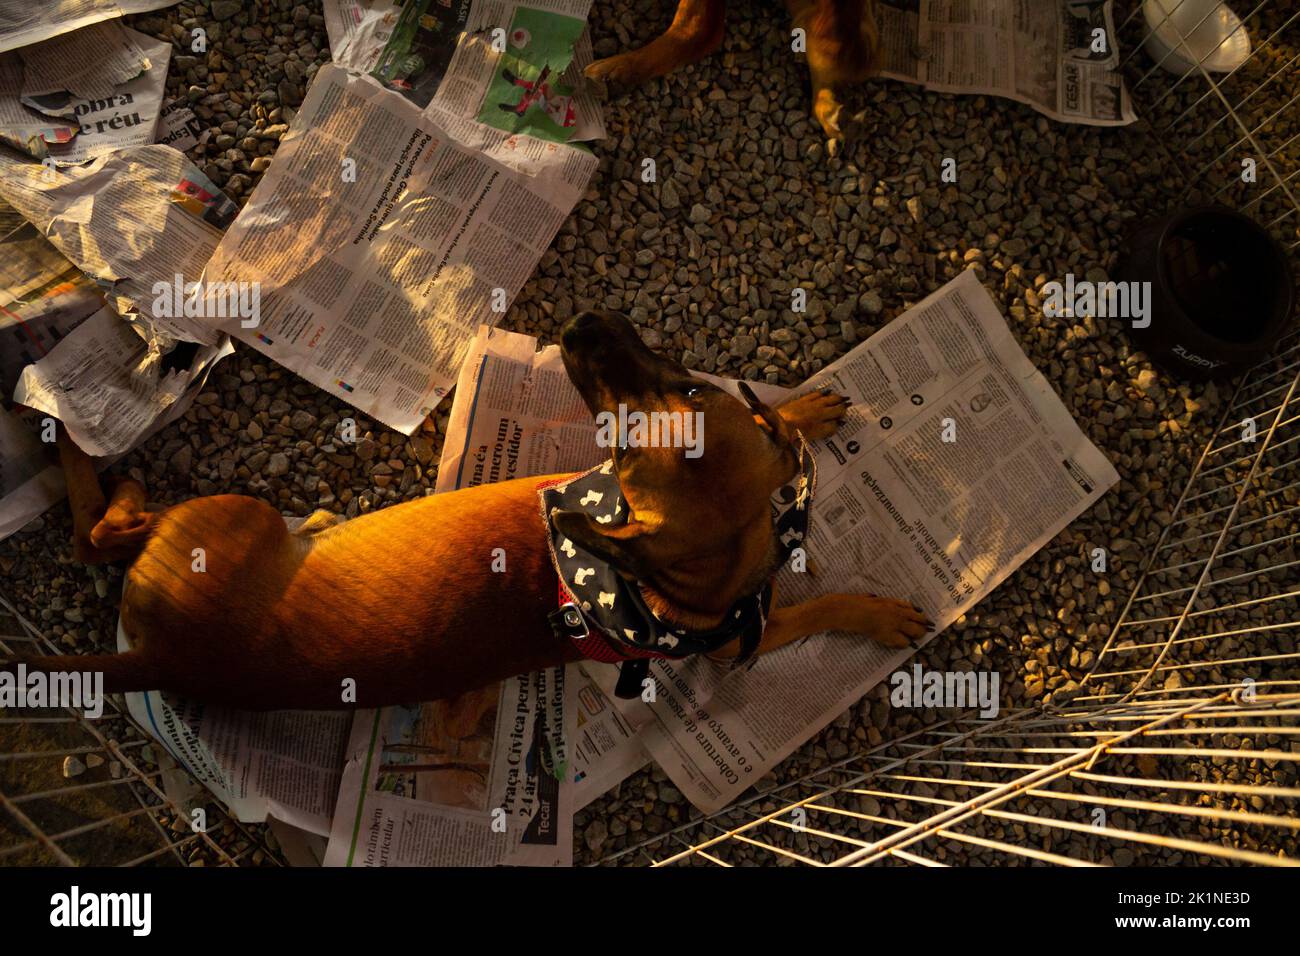 Goiânia, Goias, Brazil – September 17, 2022: A caramel dog, lying on sheets of newspaper, on display inside a pen at an animal adoption fair. Stock Photo